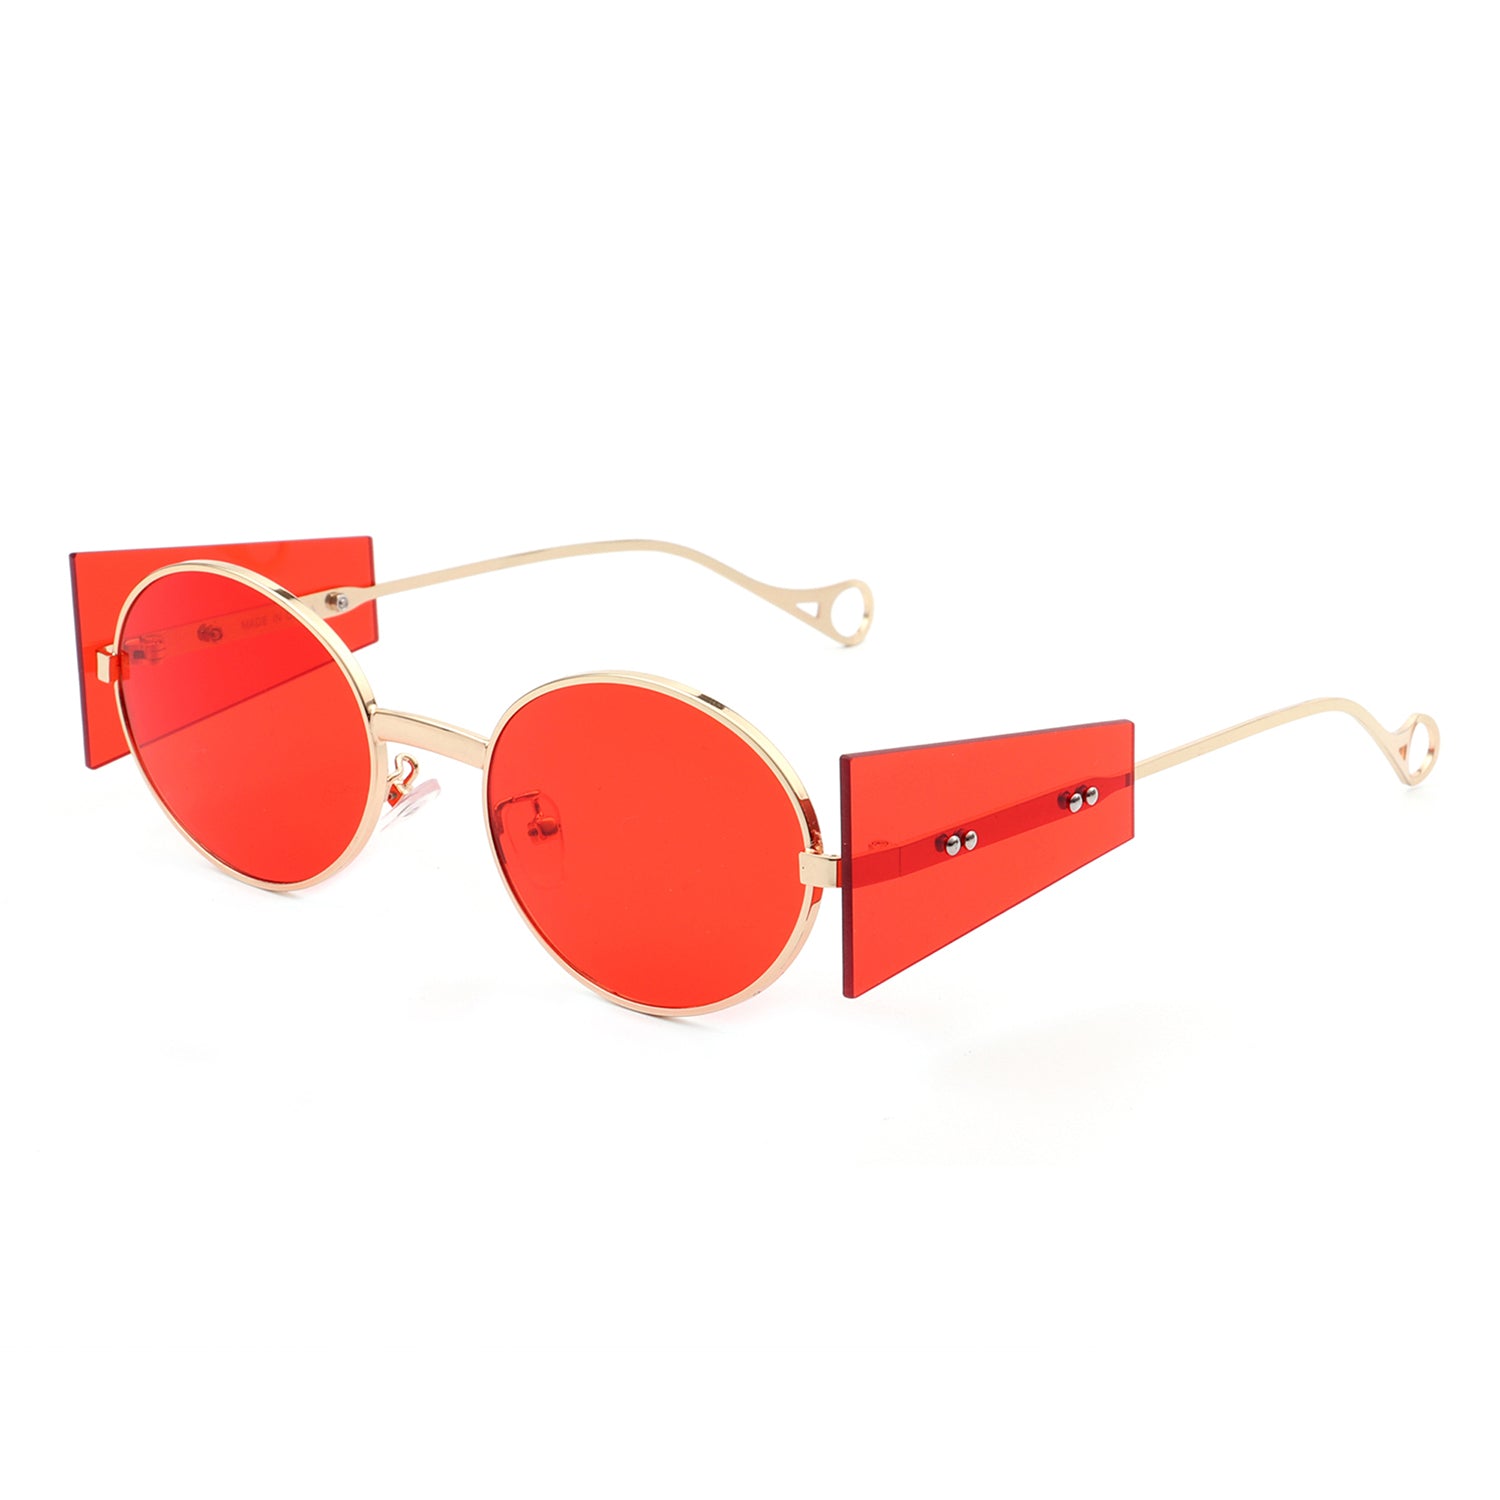 HW3003 - Circle Round Retro Oval Futuristic Vintage Tinted Fashion Sunglasses